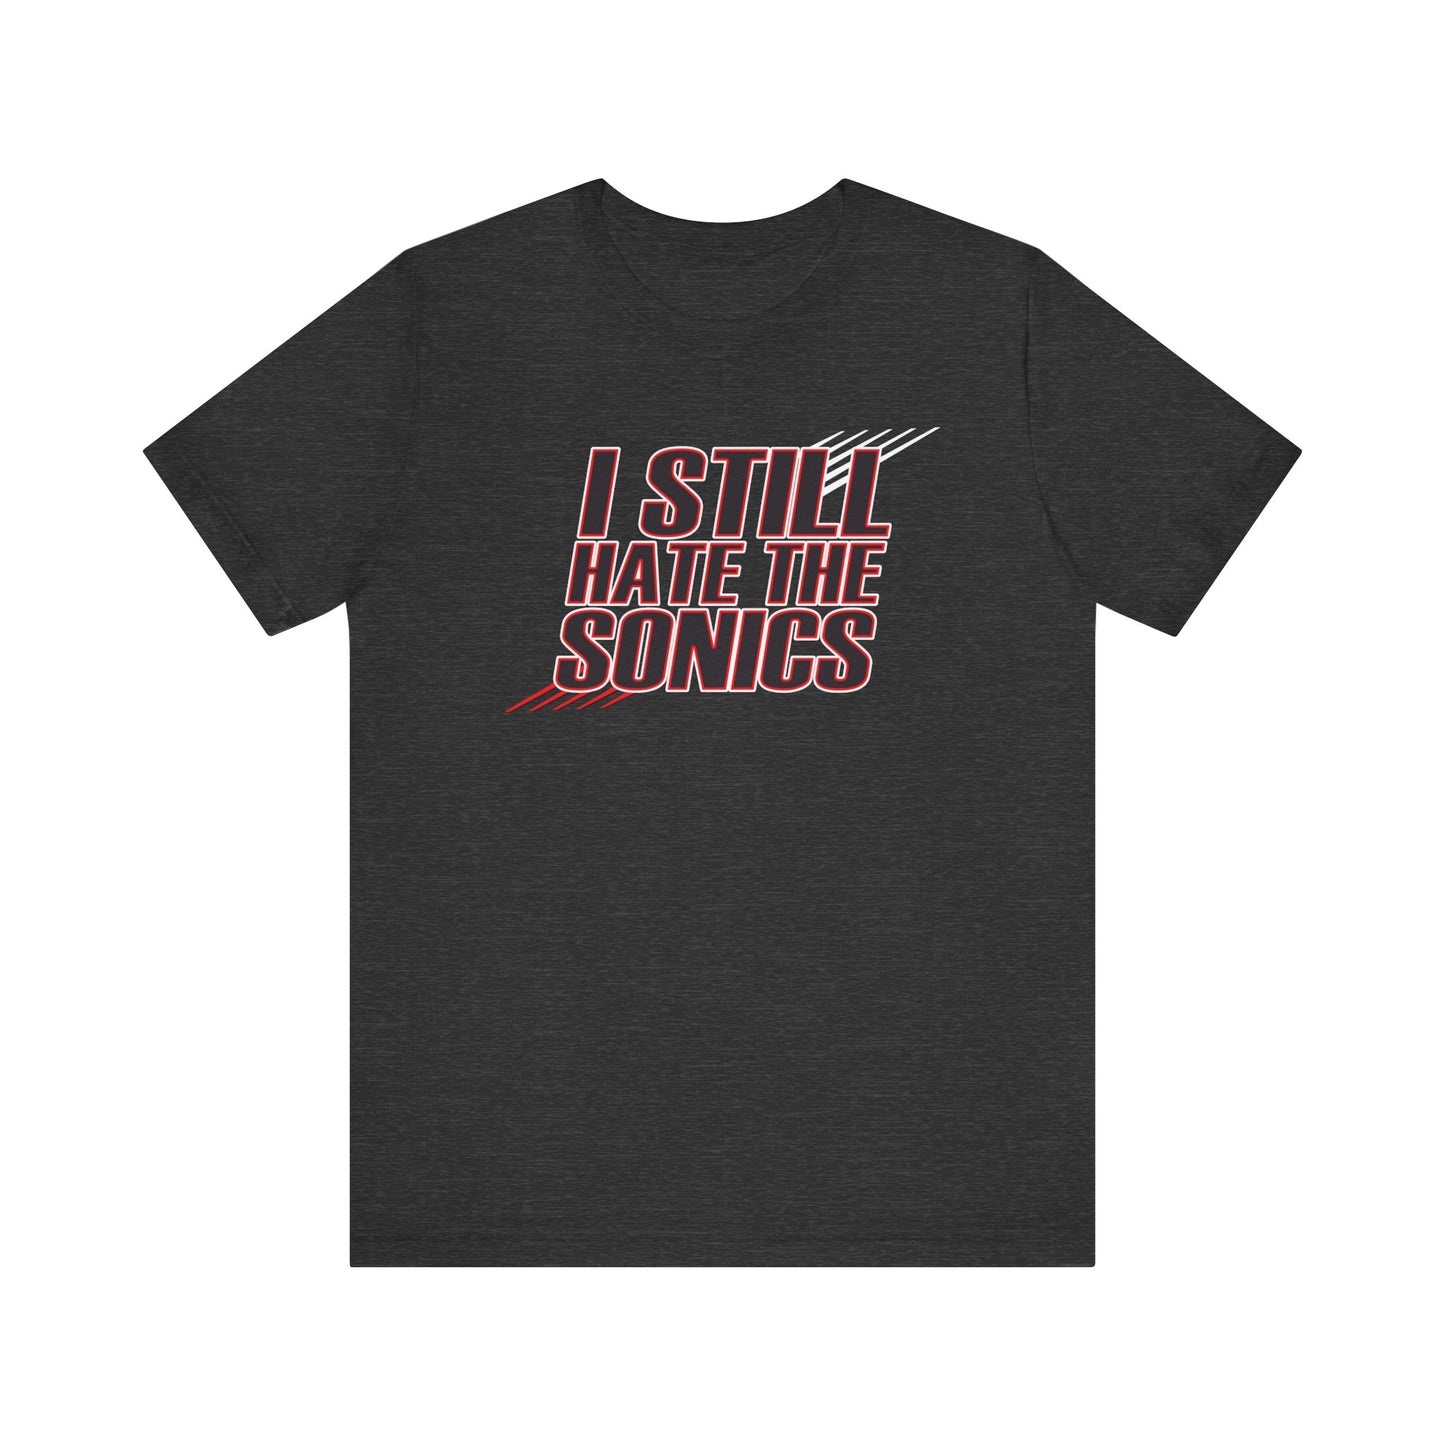 I Still Hate The Sonics (for Portland fans) - Unisex Jersey Short Sleeve Tee